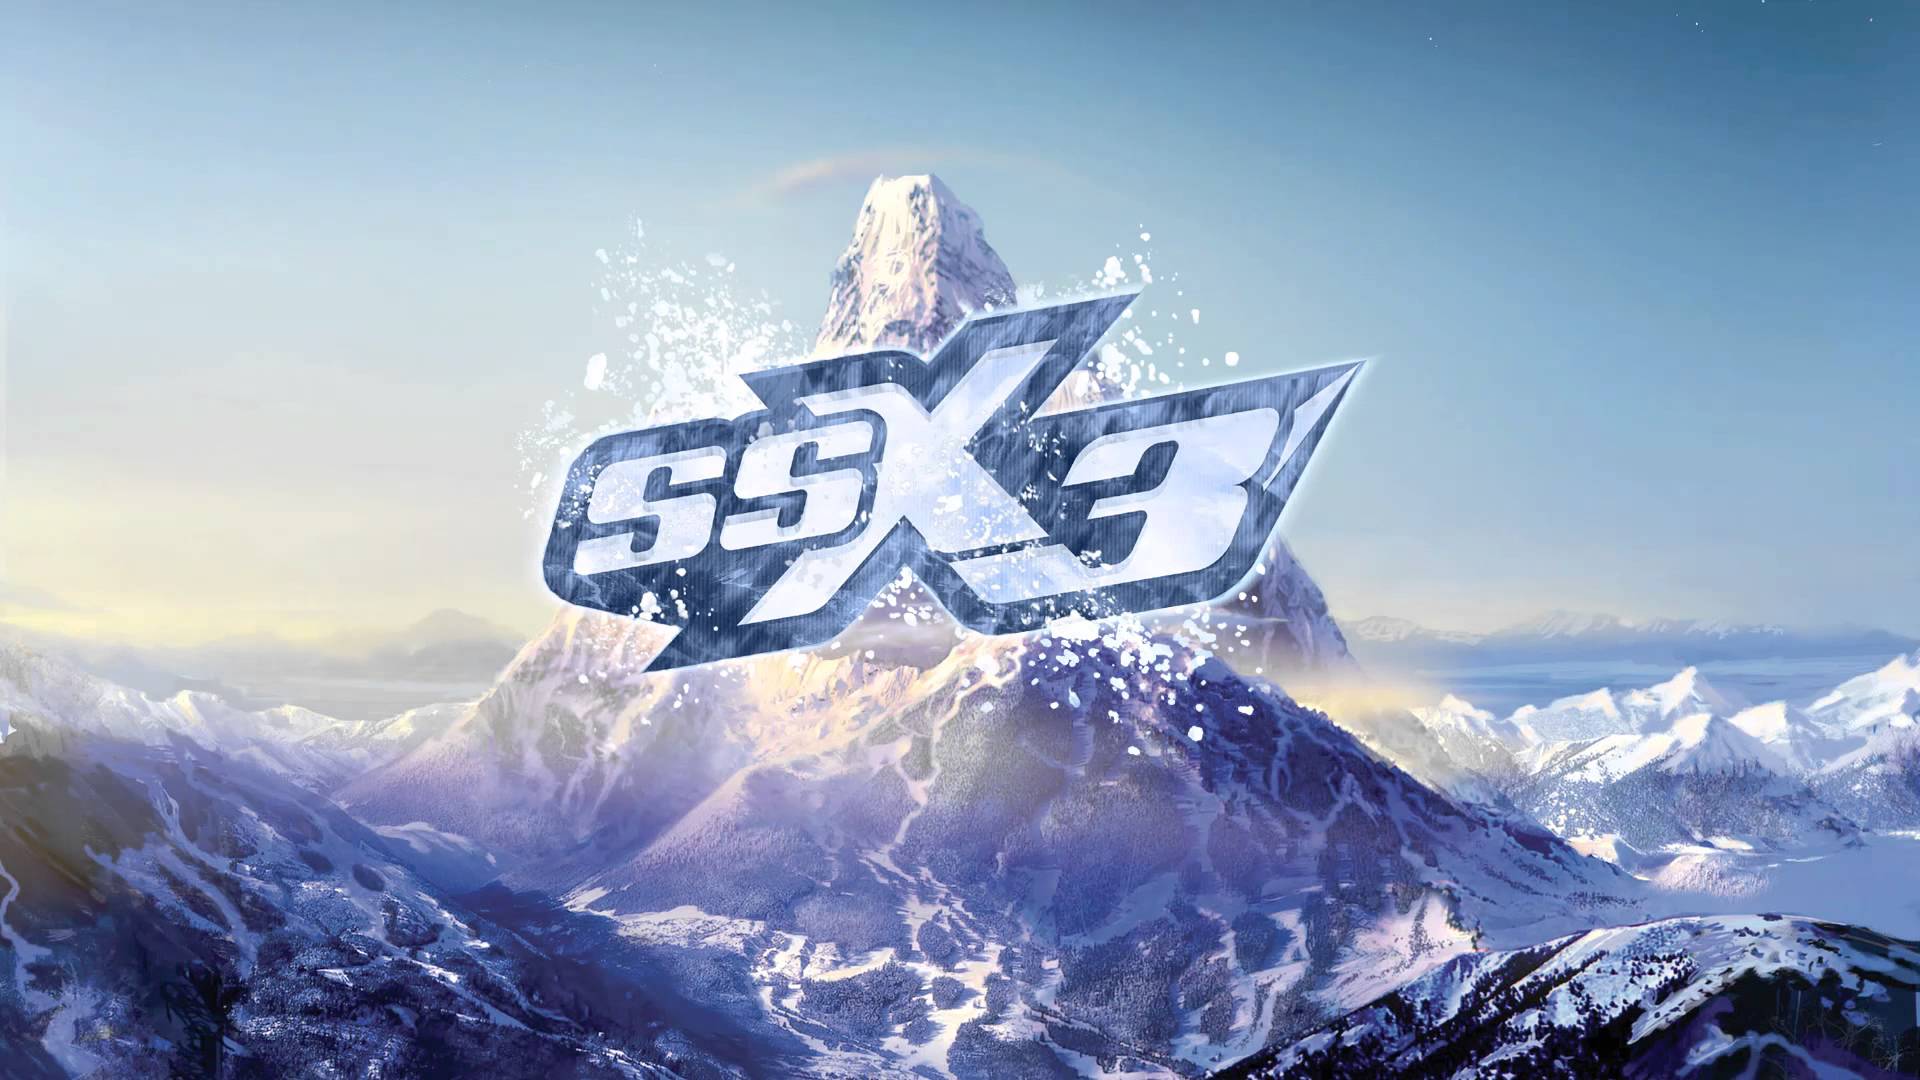 HD wallpaper video game, ssx 3, big mountain, logo